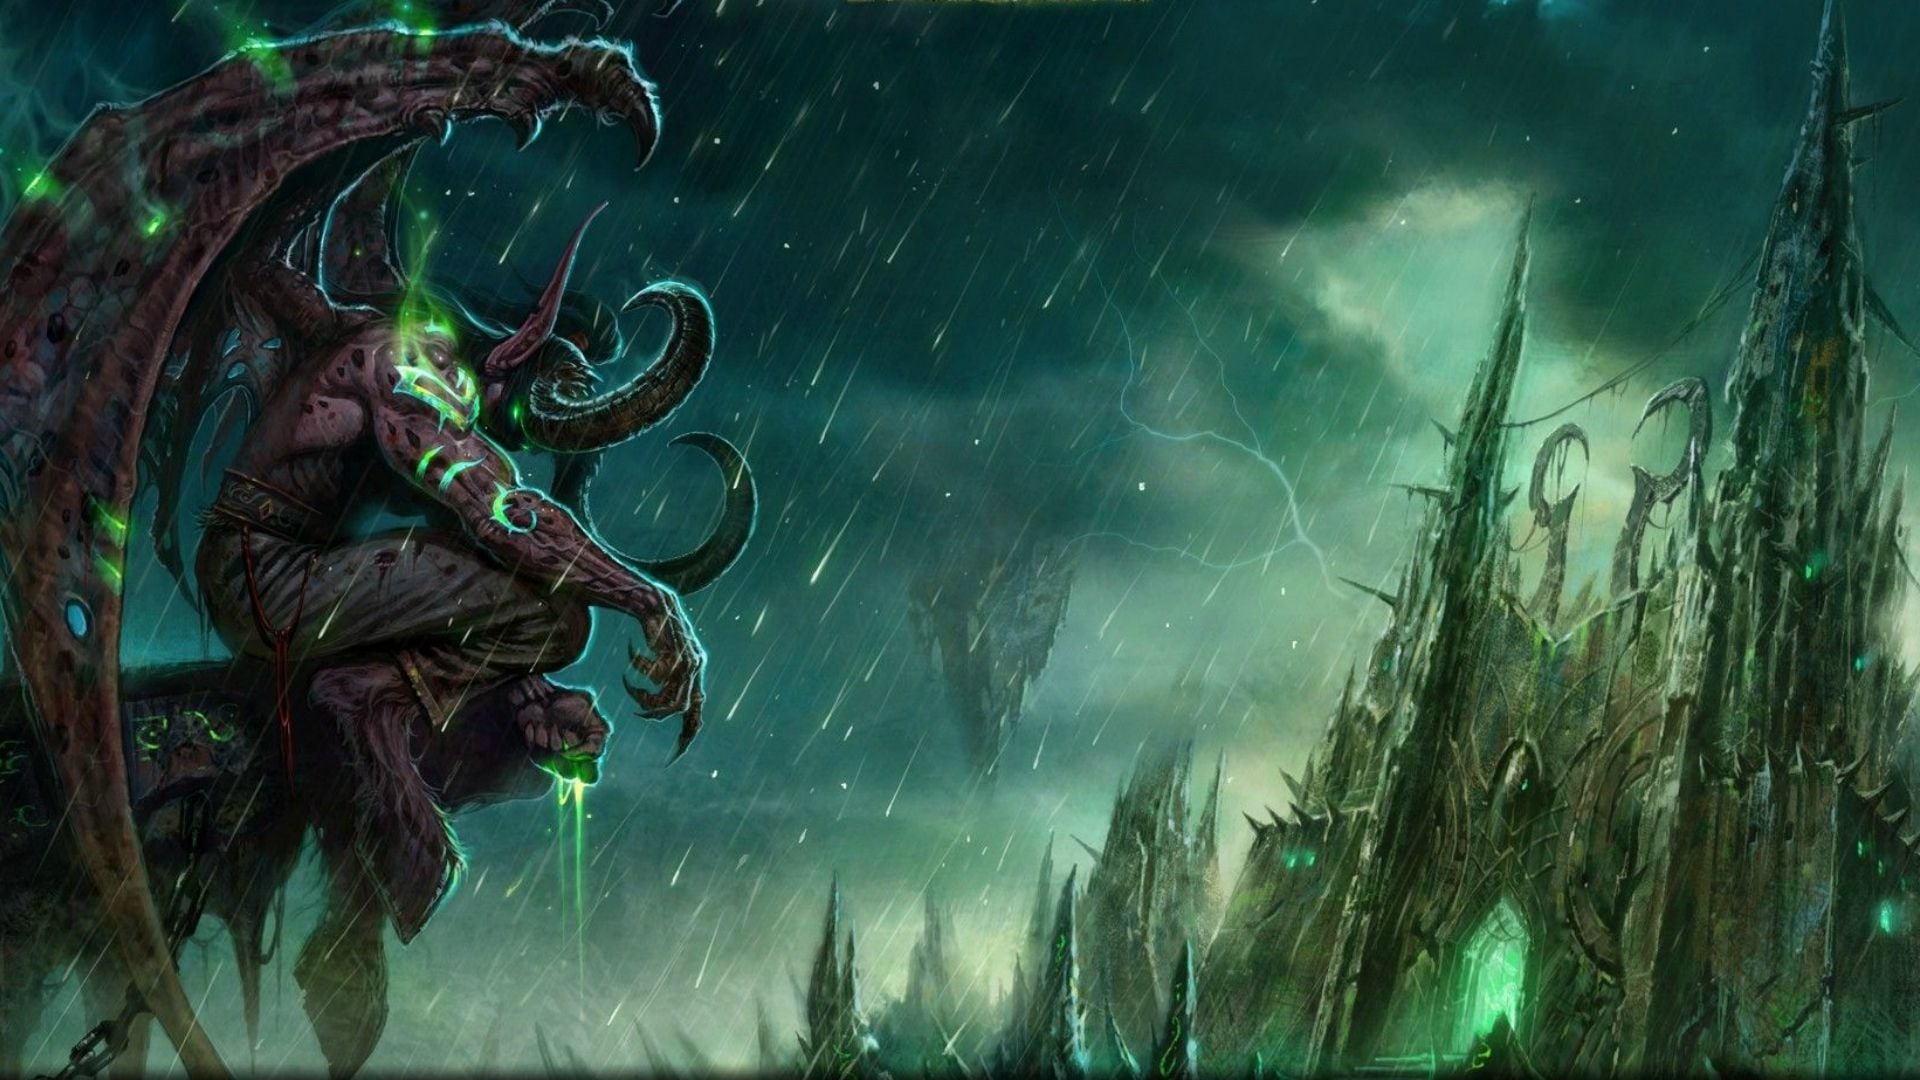 World Of Warcraft Legion HD Wallpaper